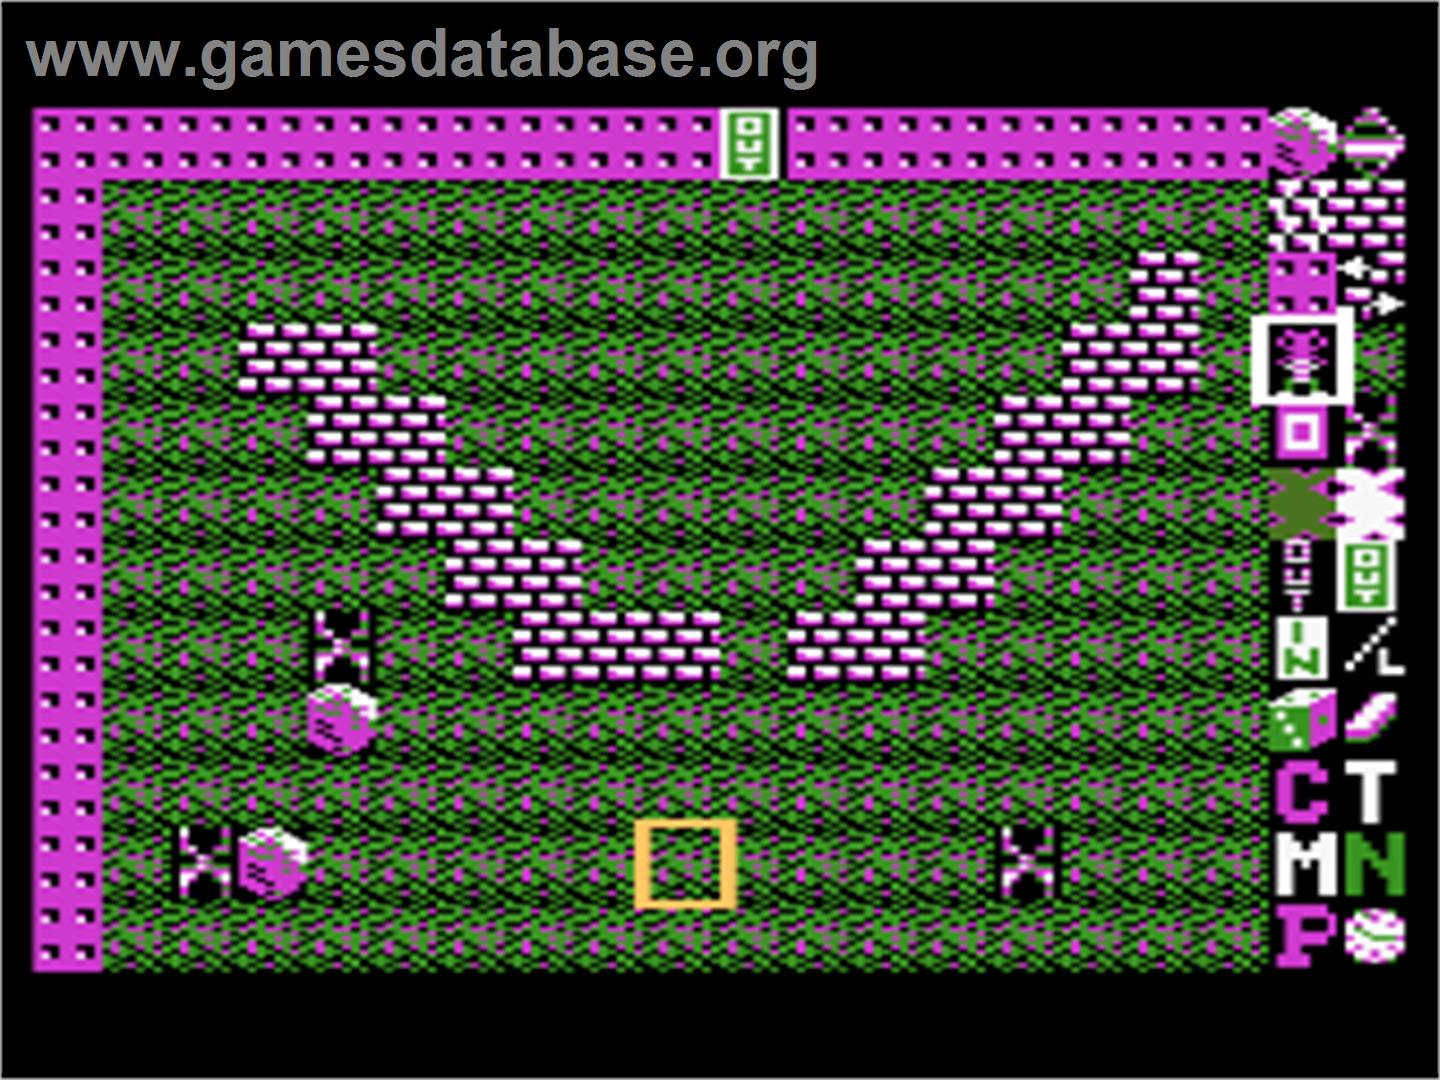 Boulder Dash Construction Kit - Atari 8-bit - Artwork - In Game